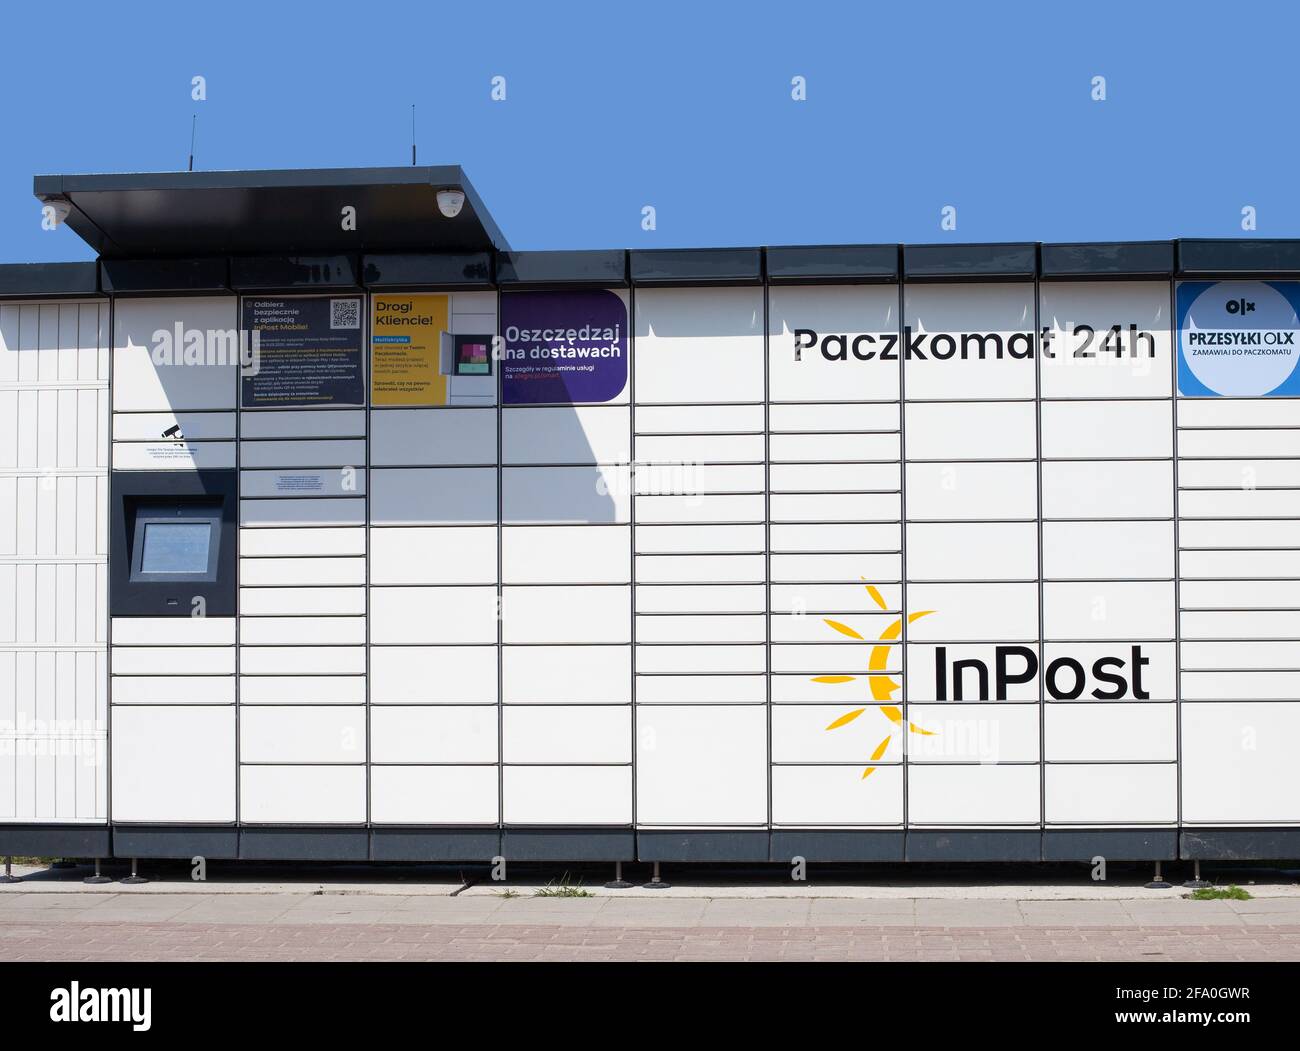 Poland, Plewiska - April 20, 2021: Inpost package 24 hours drop machine  Stock Photo - Alamy